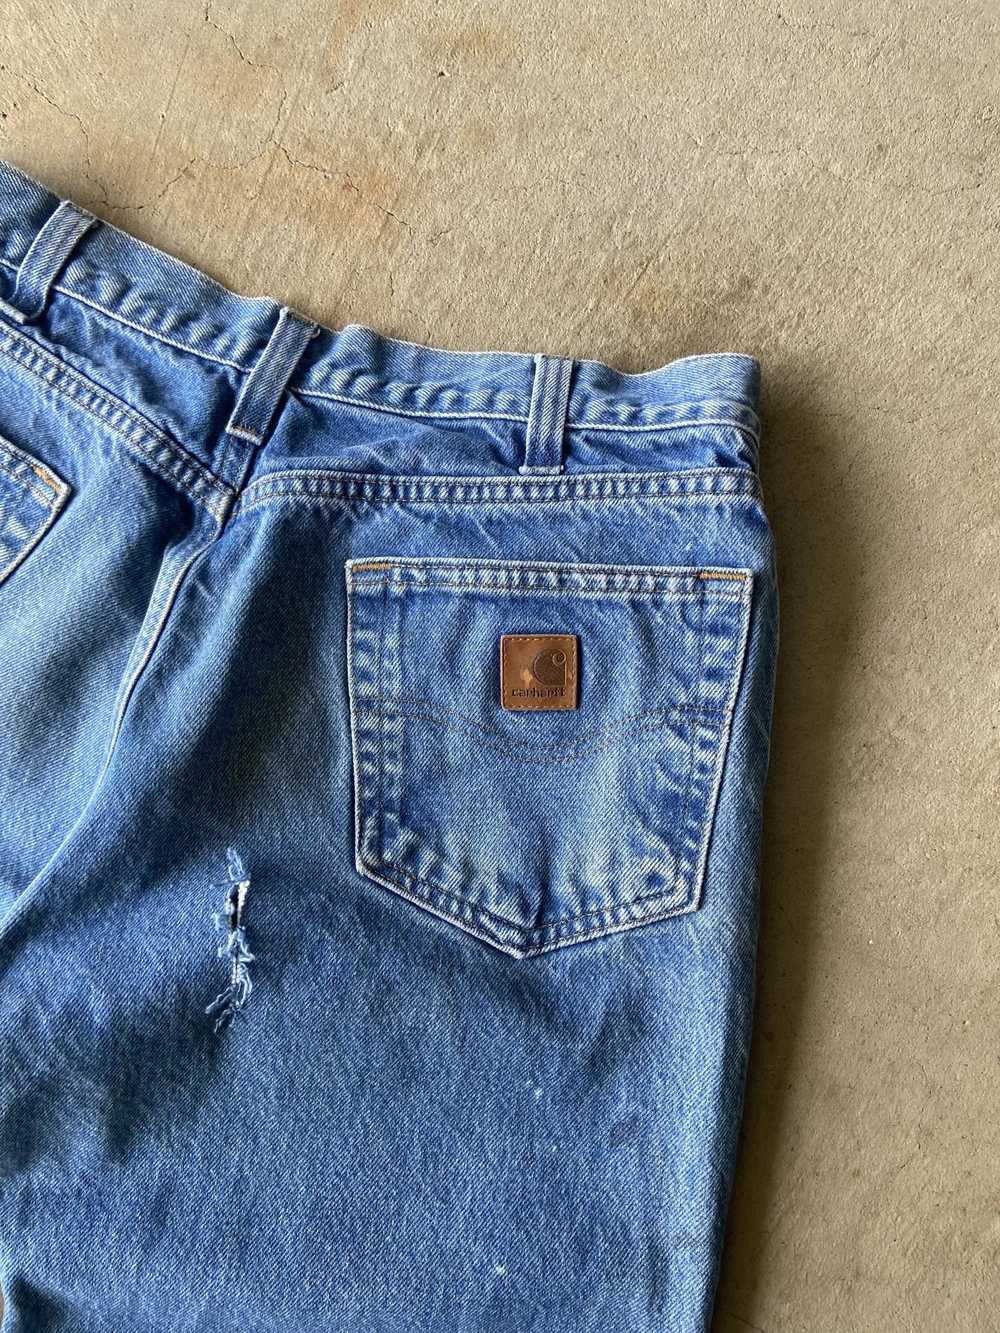 Carhartt Carhartt Thrashed Painter's Blue Jeans - image 9